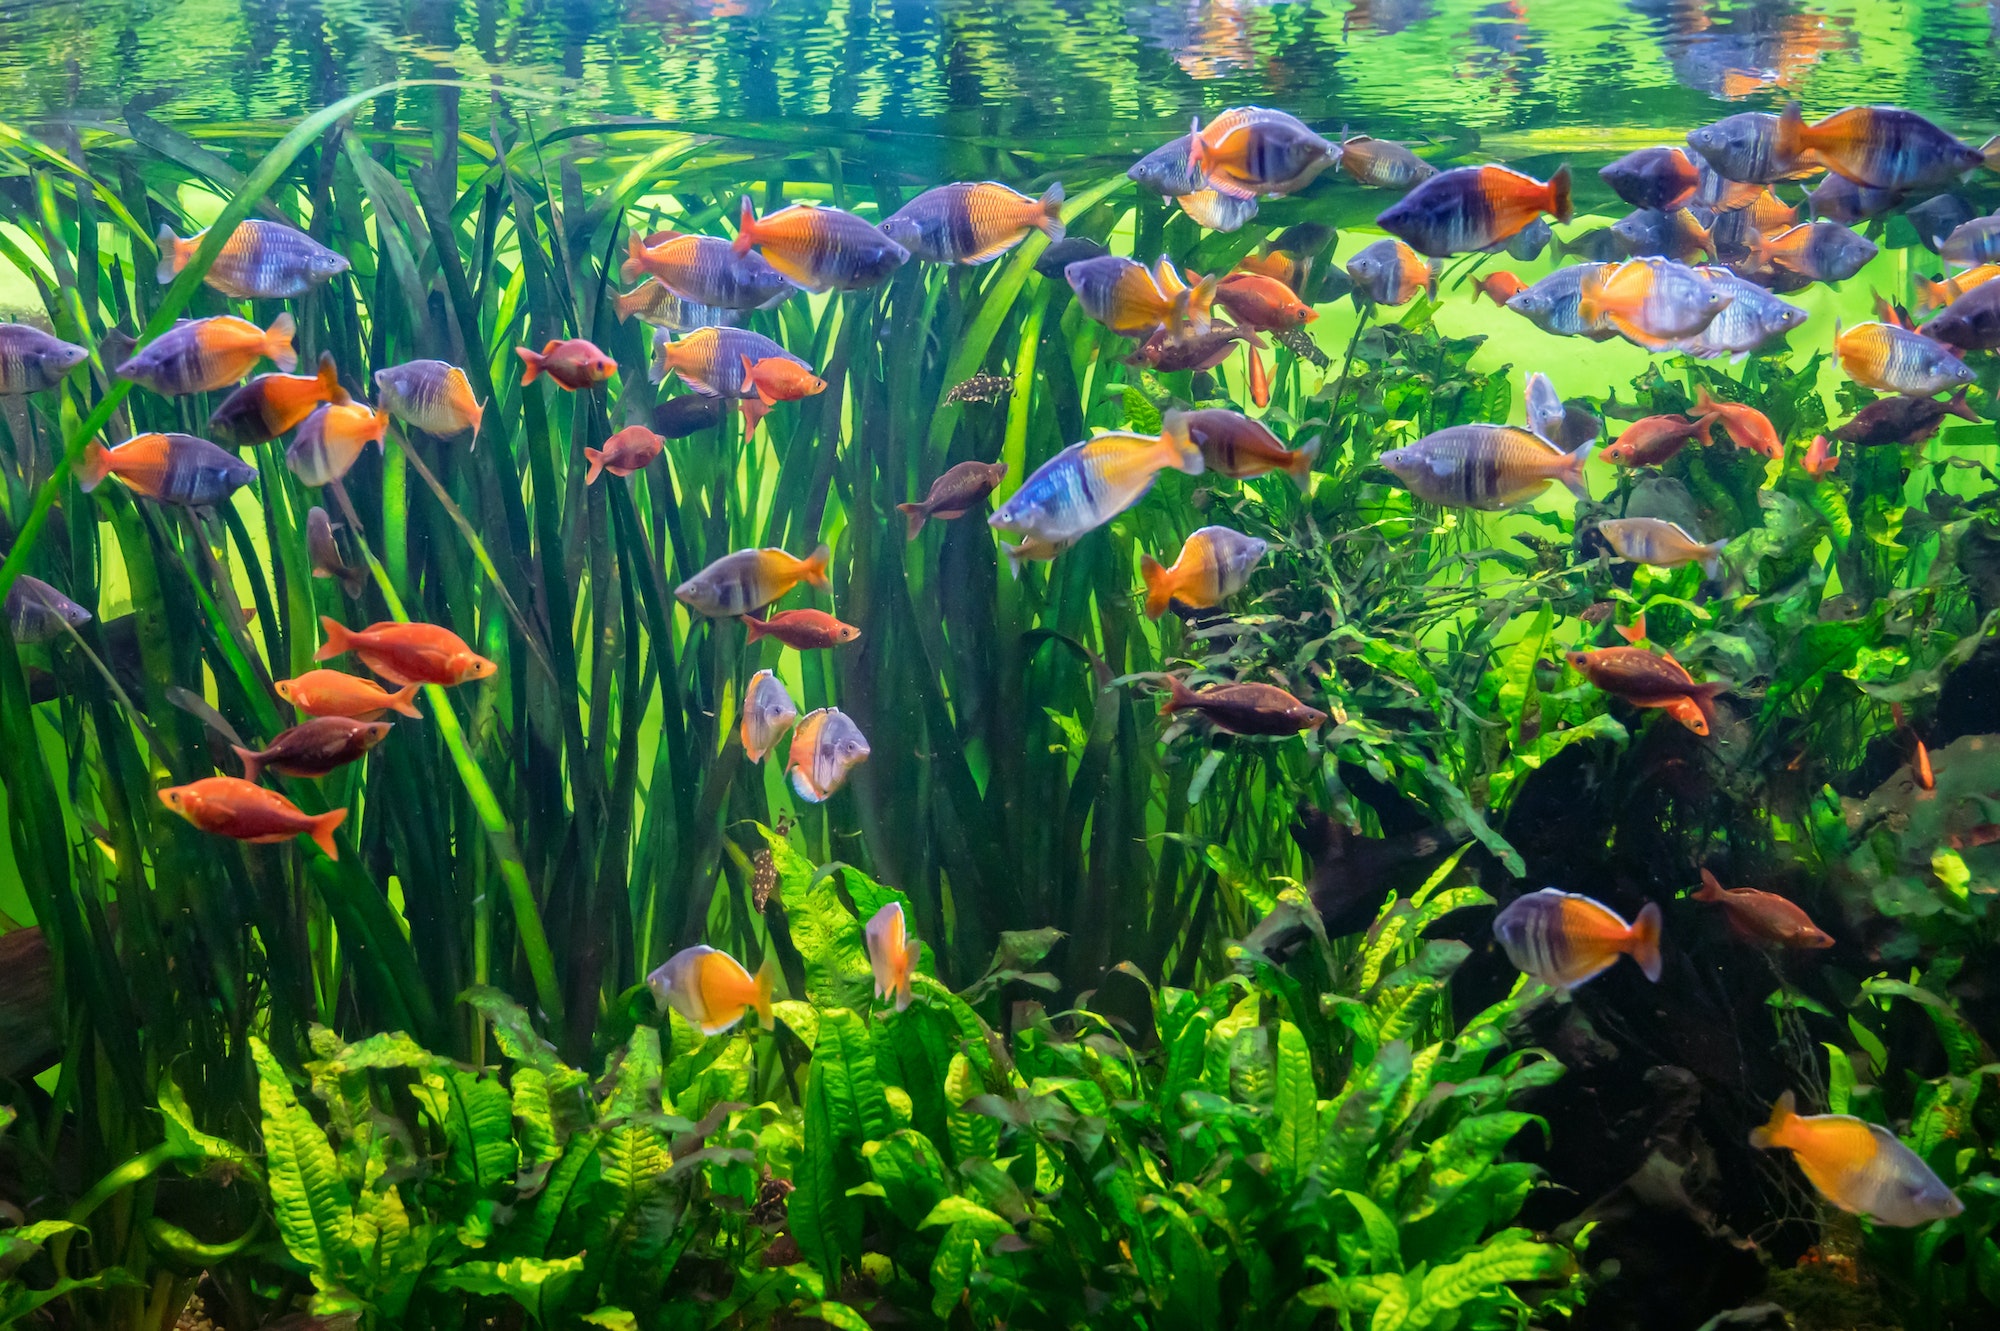 Aquarium full of fresh water fish and aquatic plants